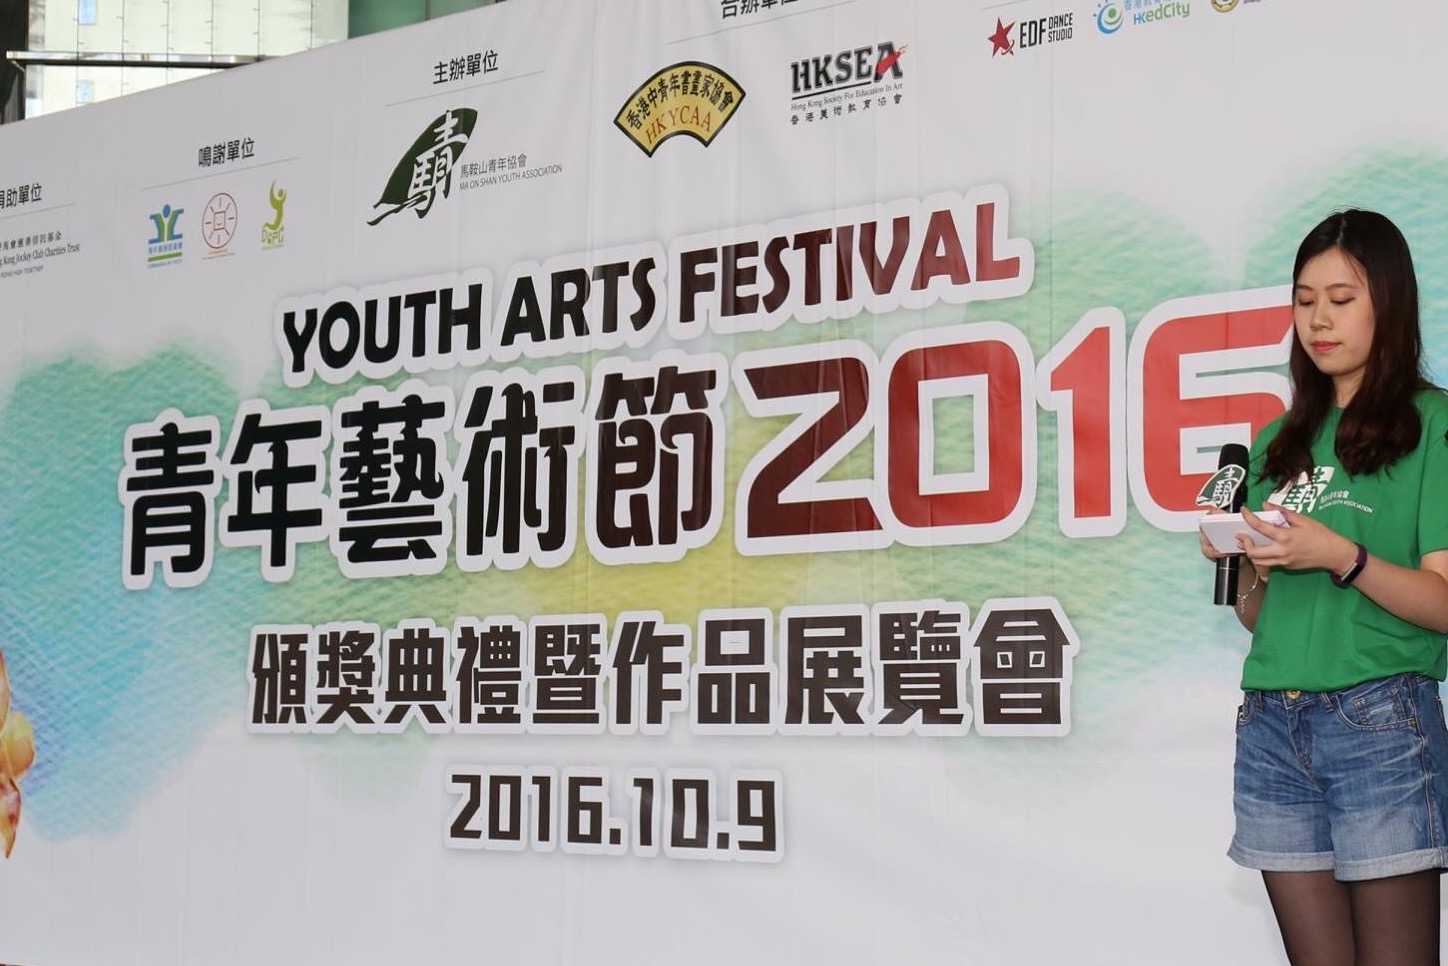 Angela Wu司儀工作紀錄: 青年藝術節2016頒獎典禮暨作品展覽會